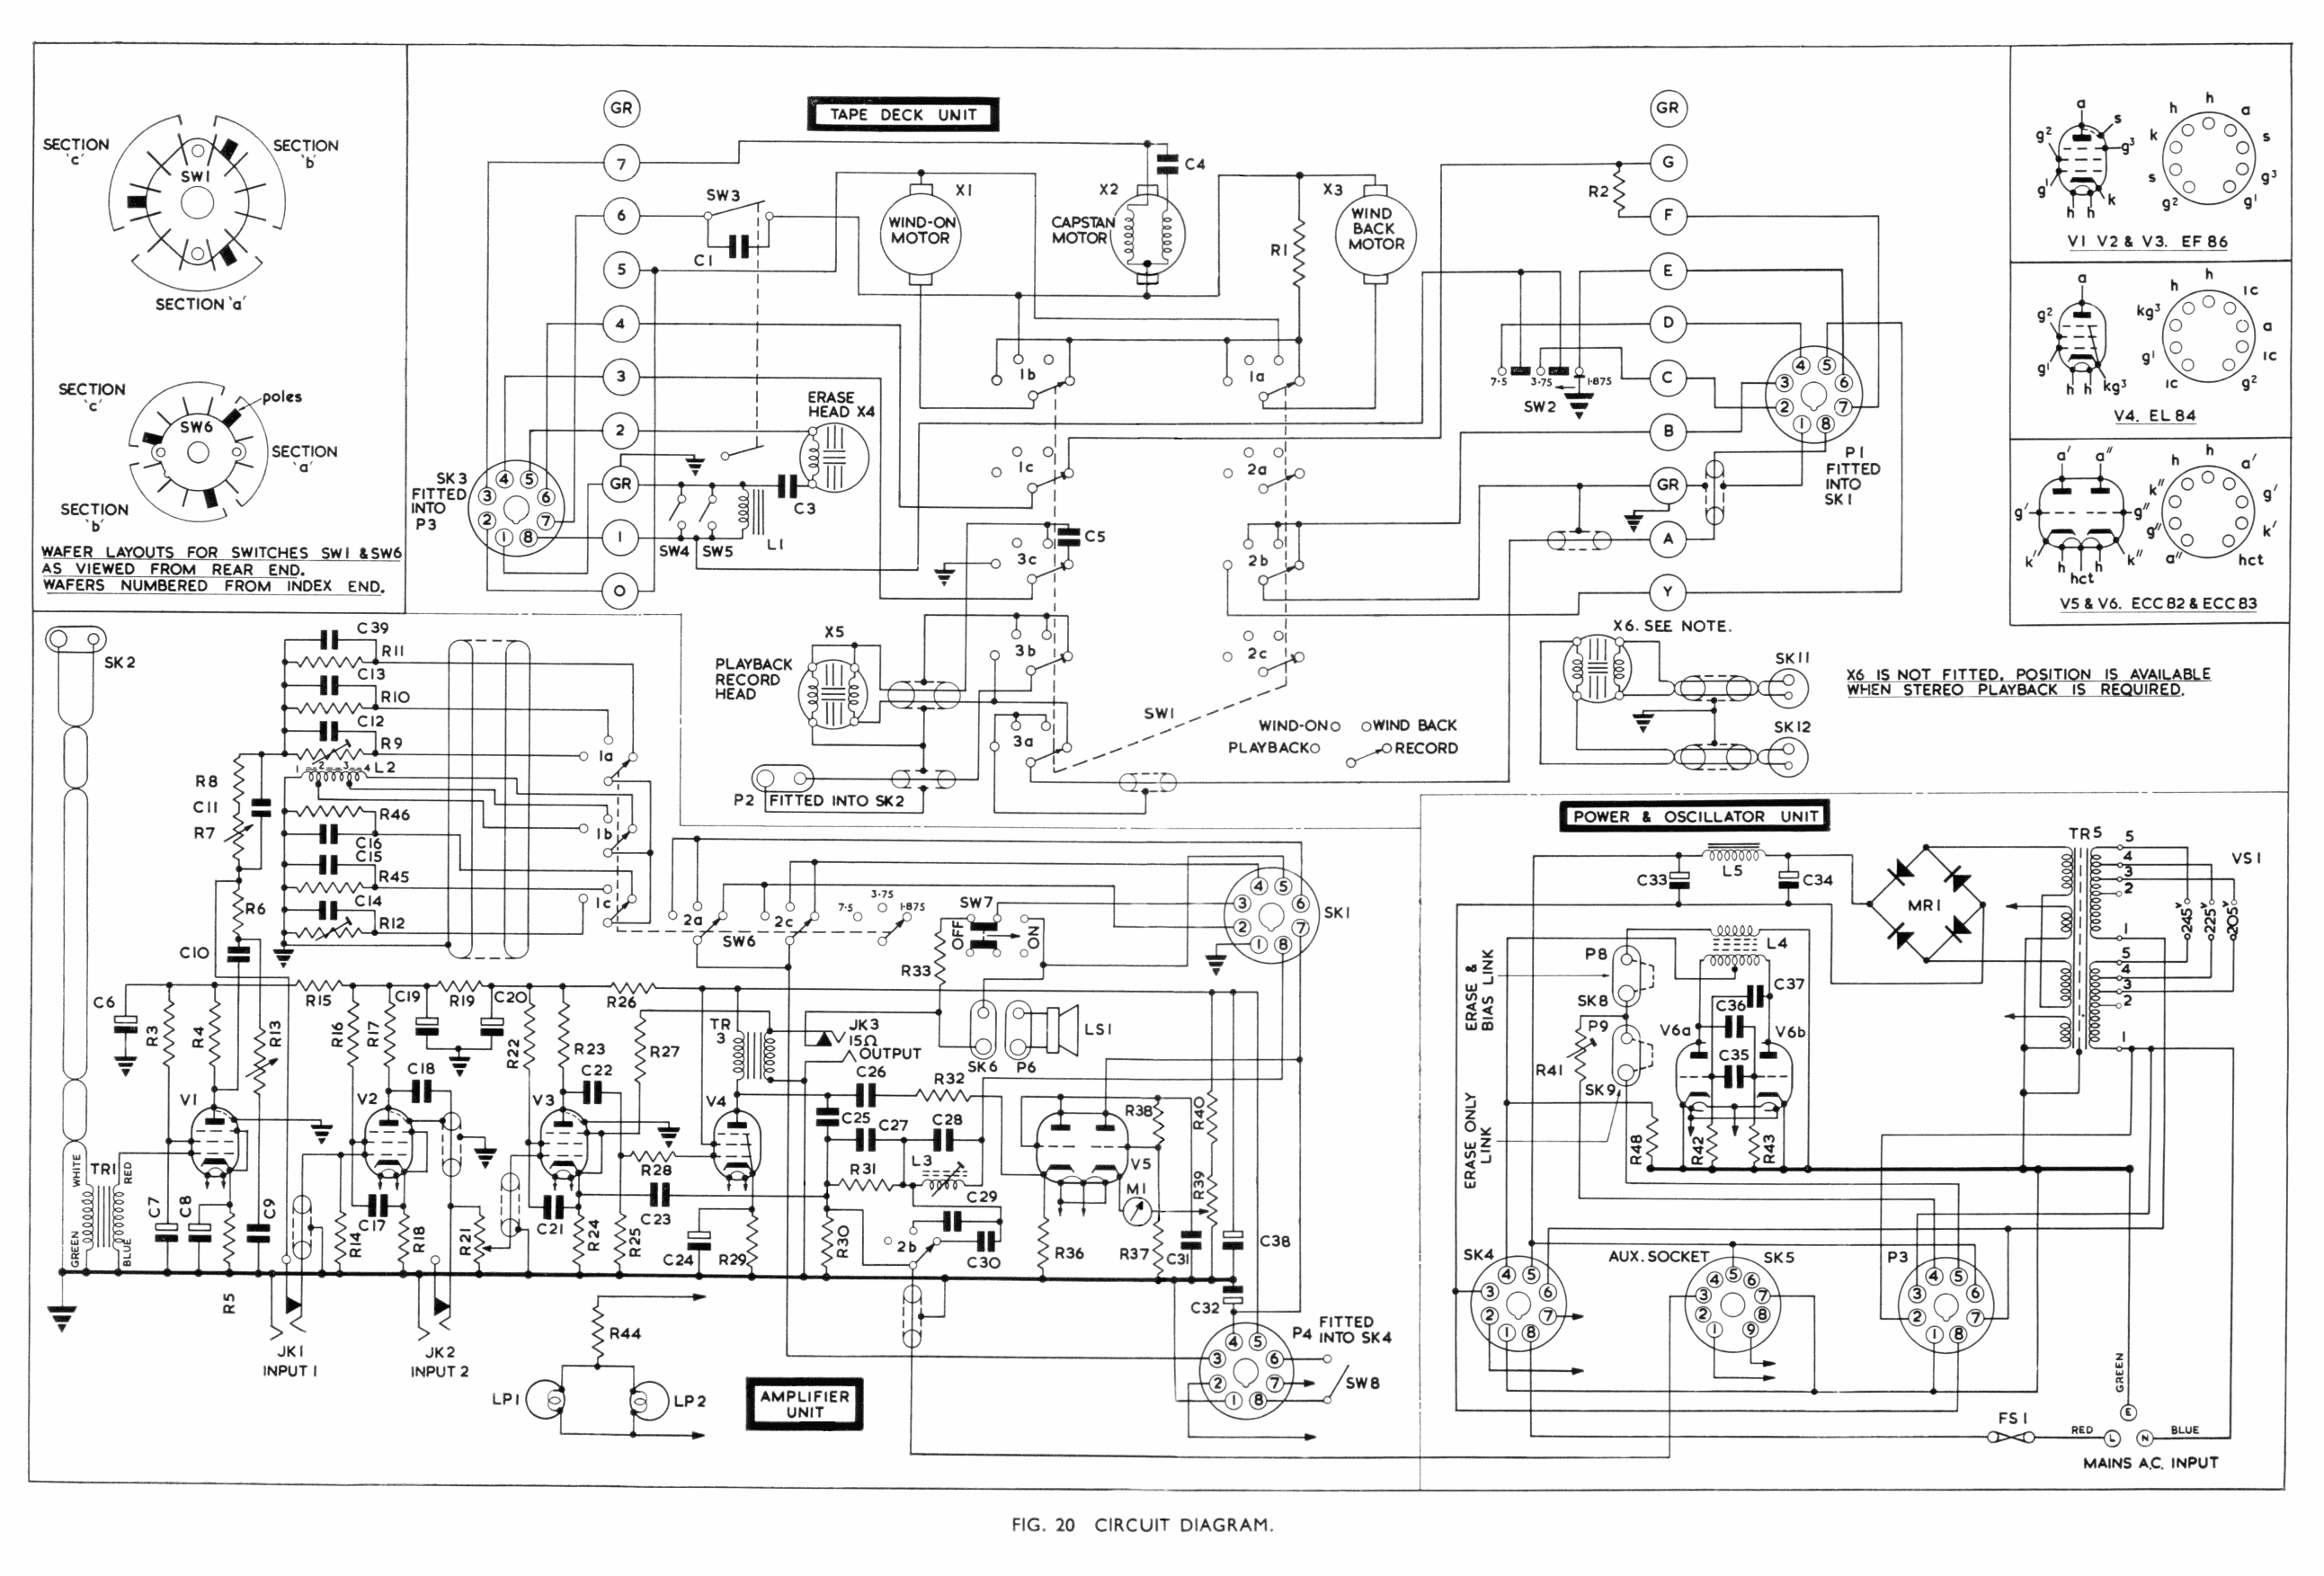 Circuit Diagram 2.0.0.0 Alpha